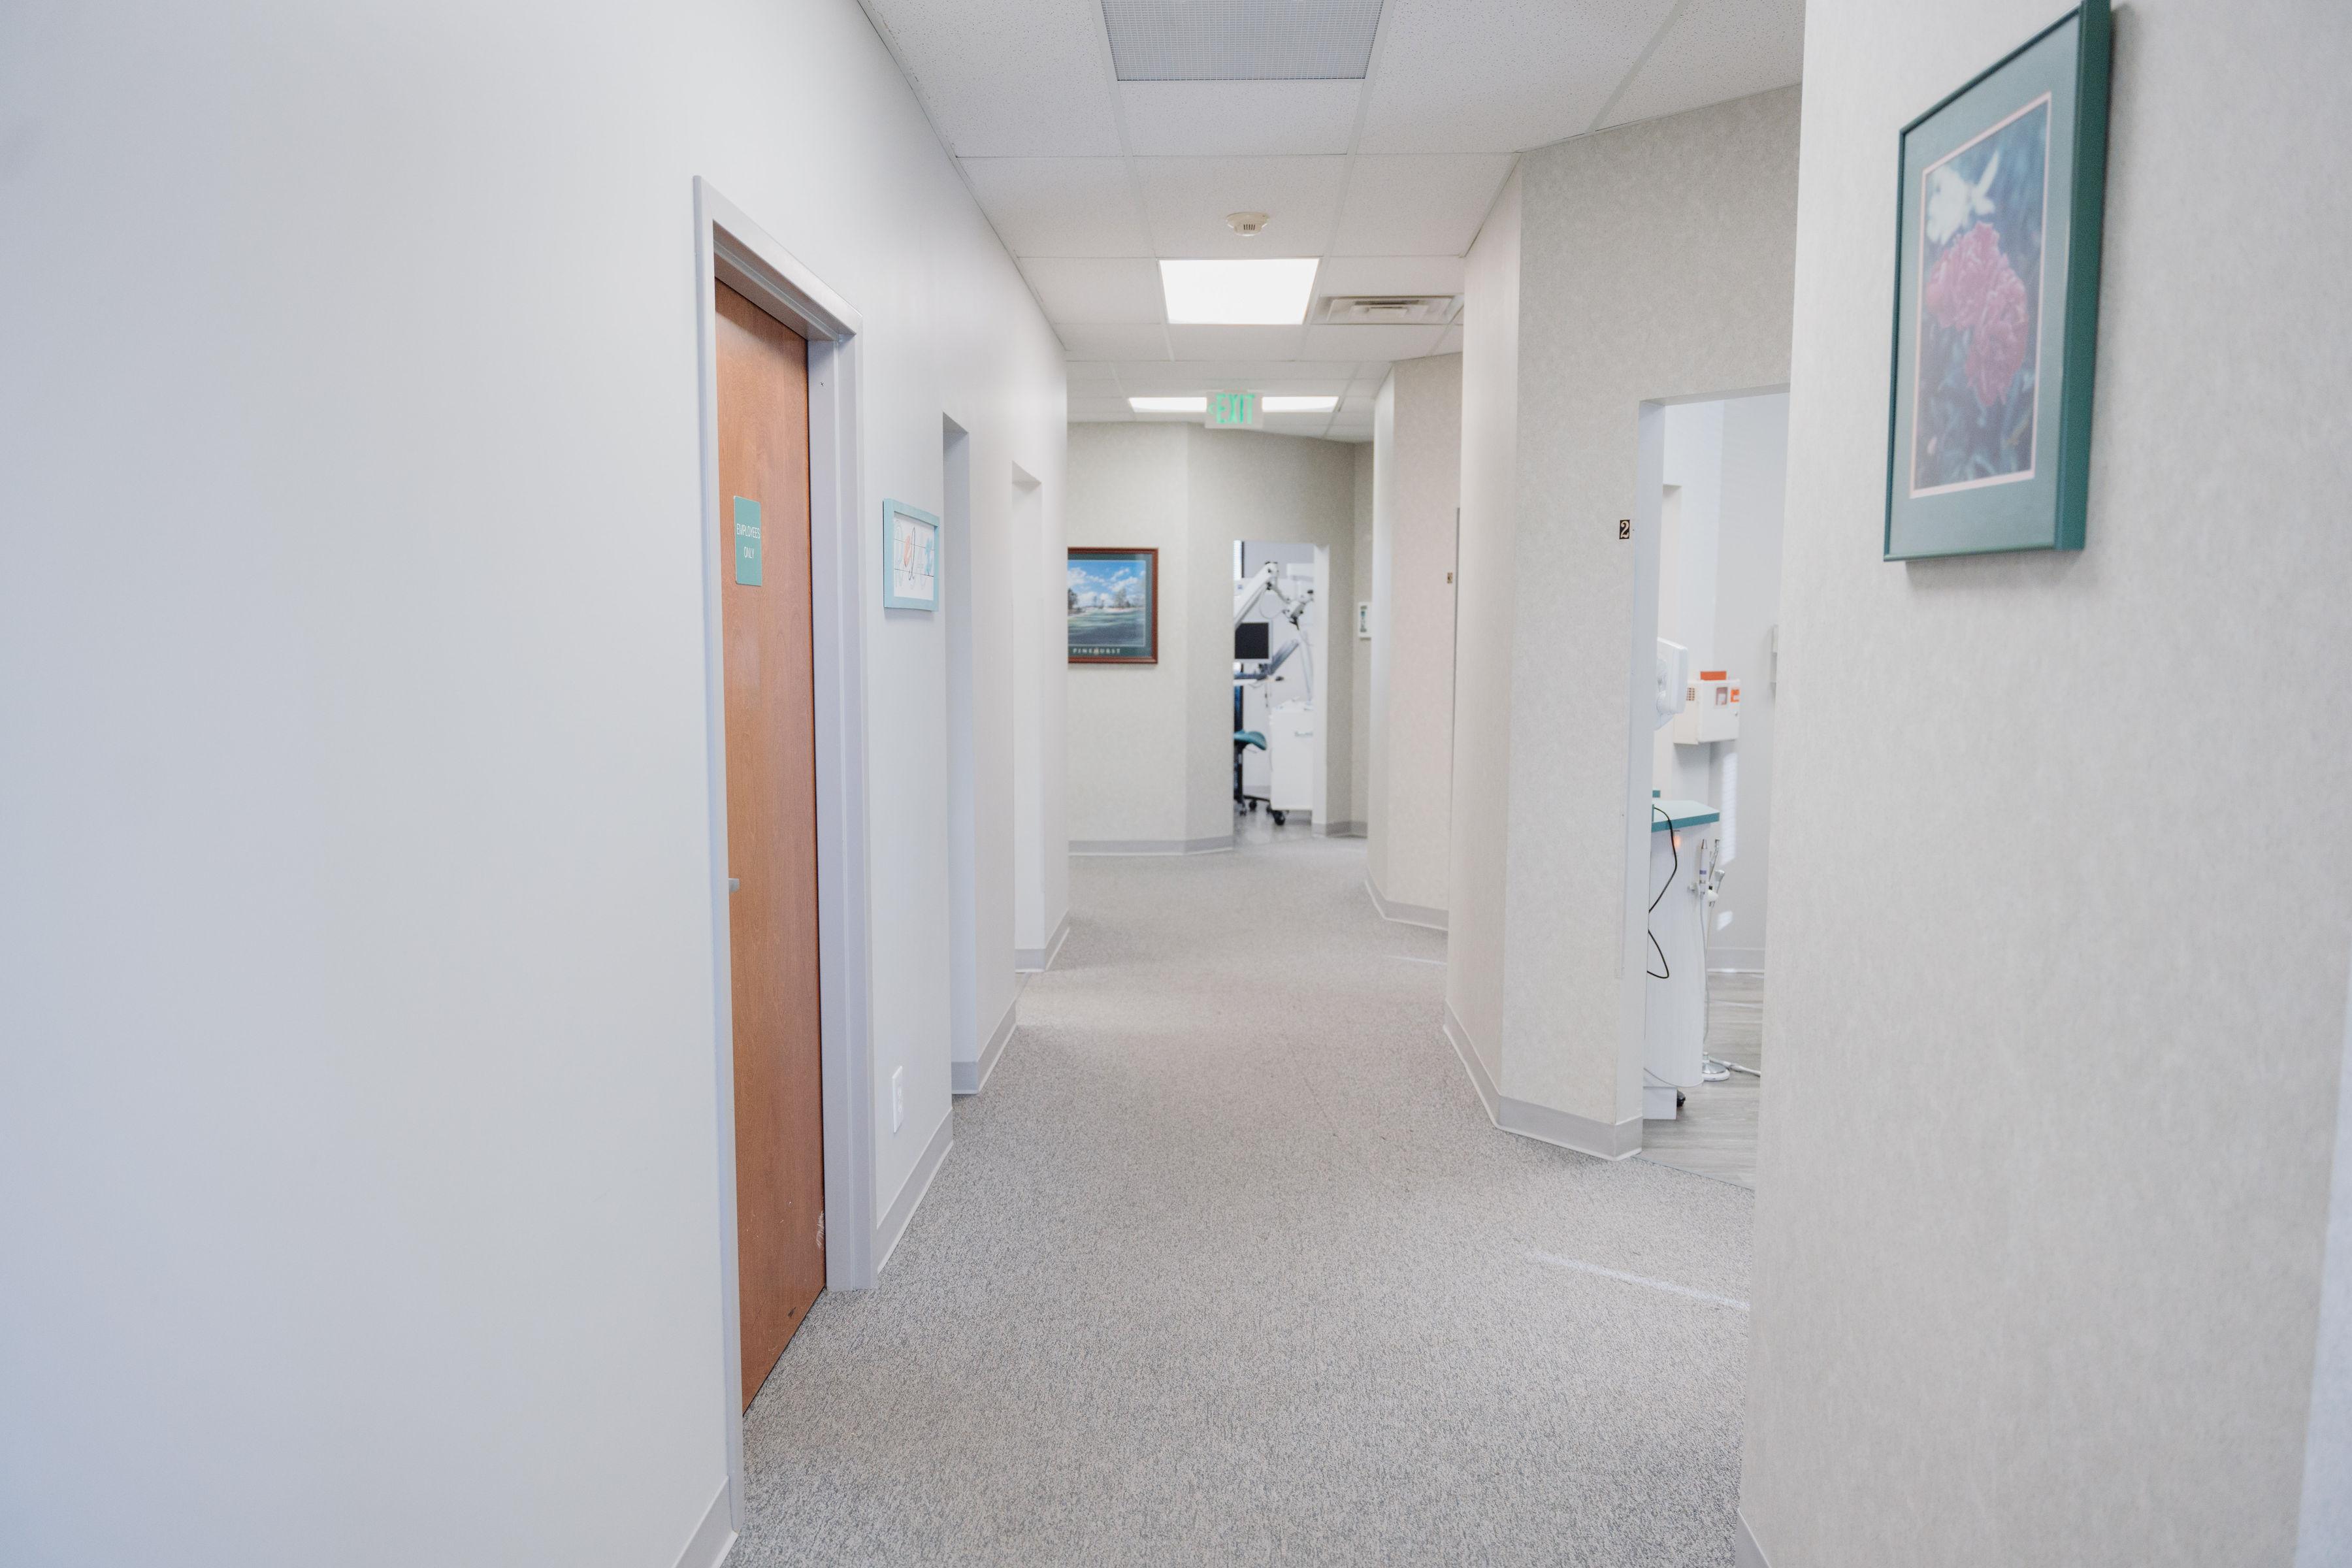 endodontics office image for hero section